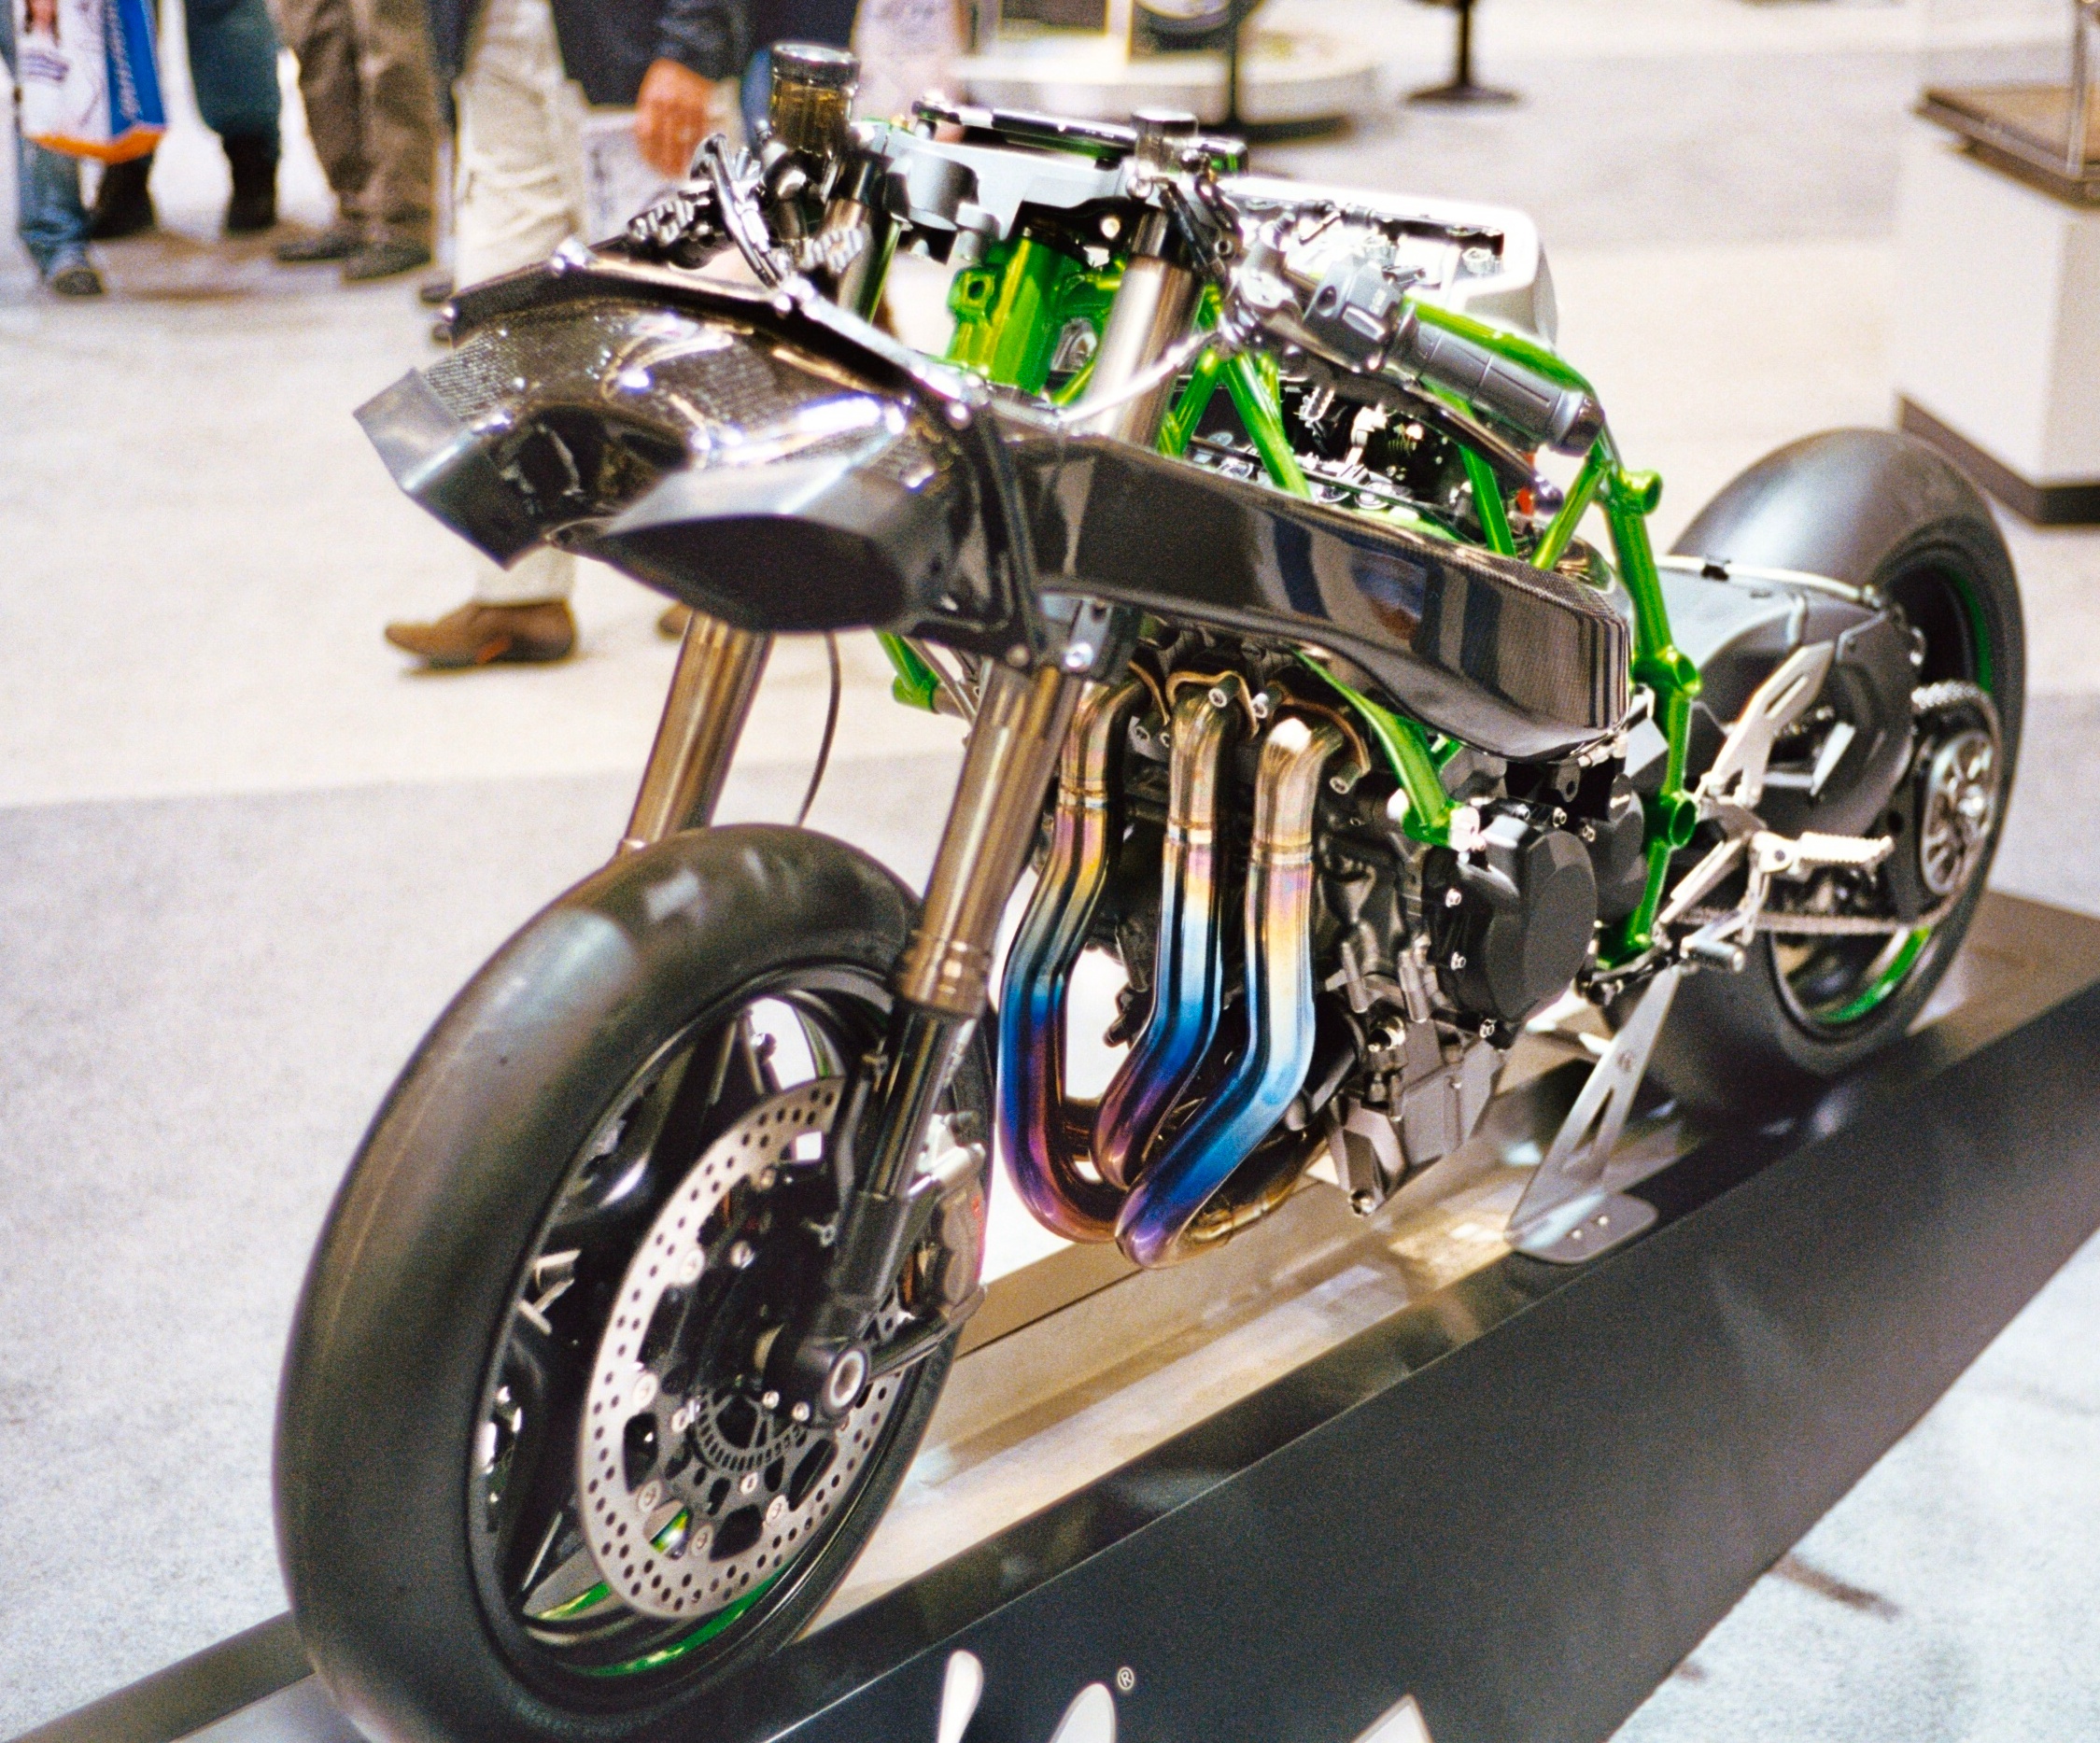 File:Kawasaki Ninja H2R exposed front.JPG - Wikimedia Commons